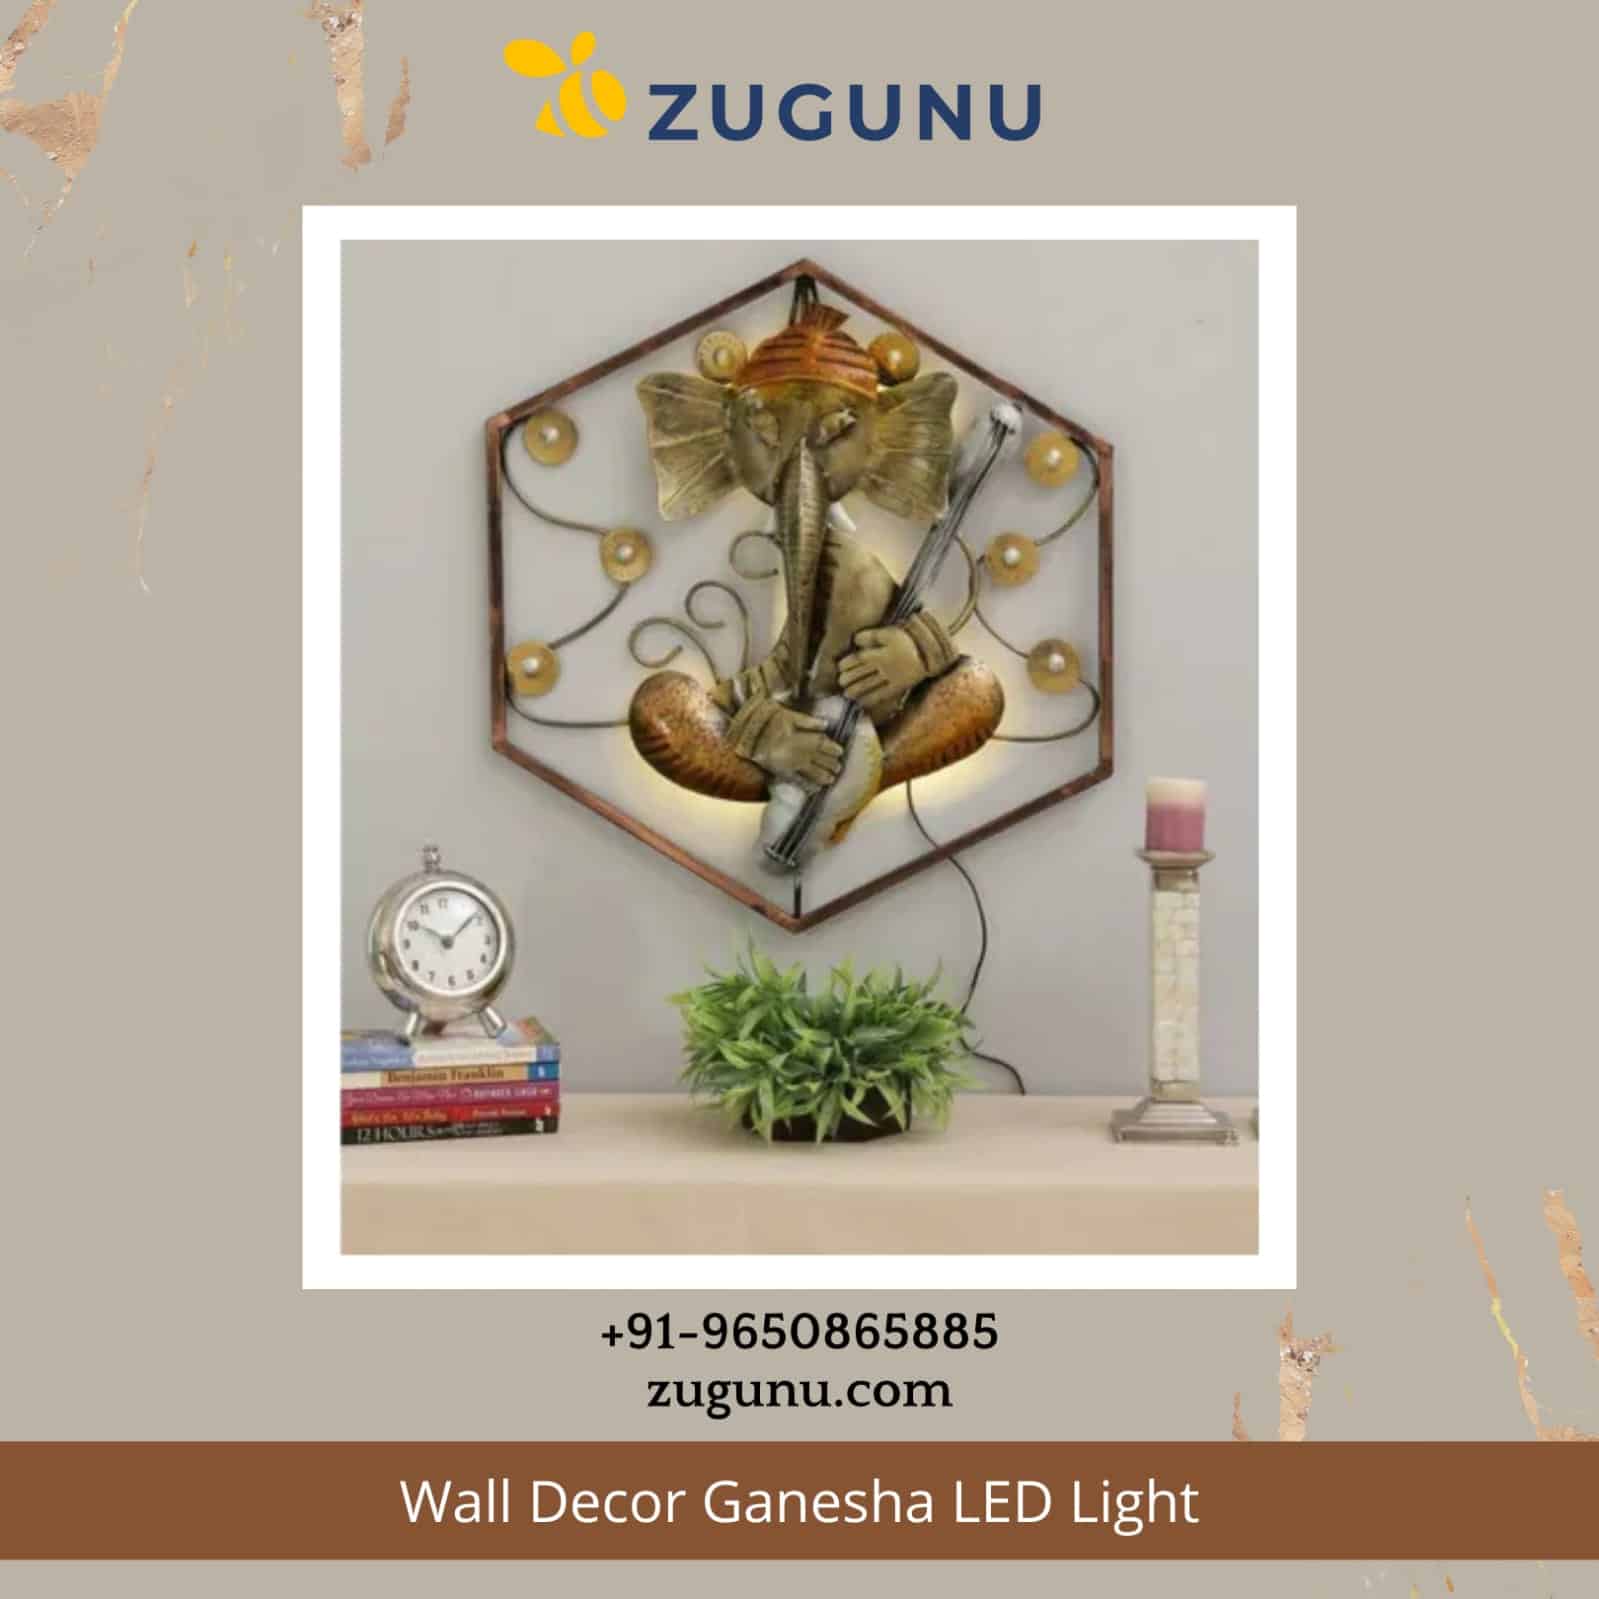 Ganesha LED Light From Zugunu Wall Decor